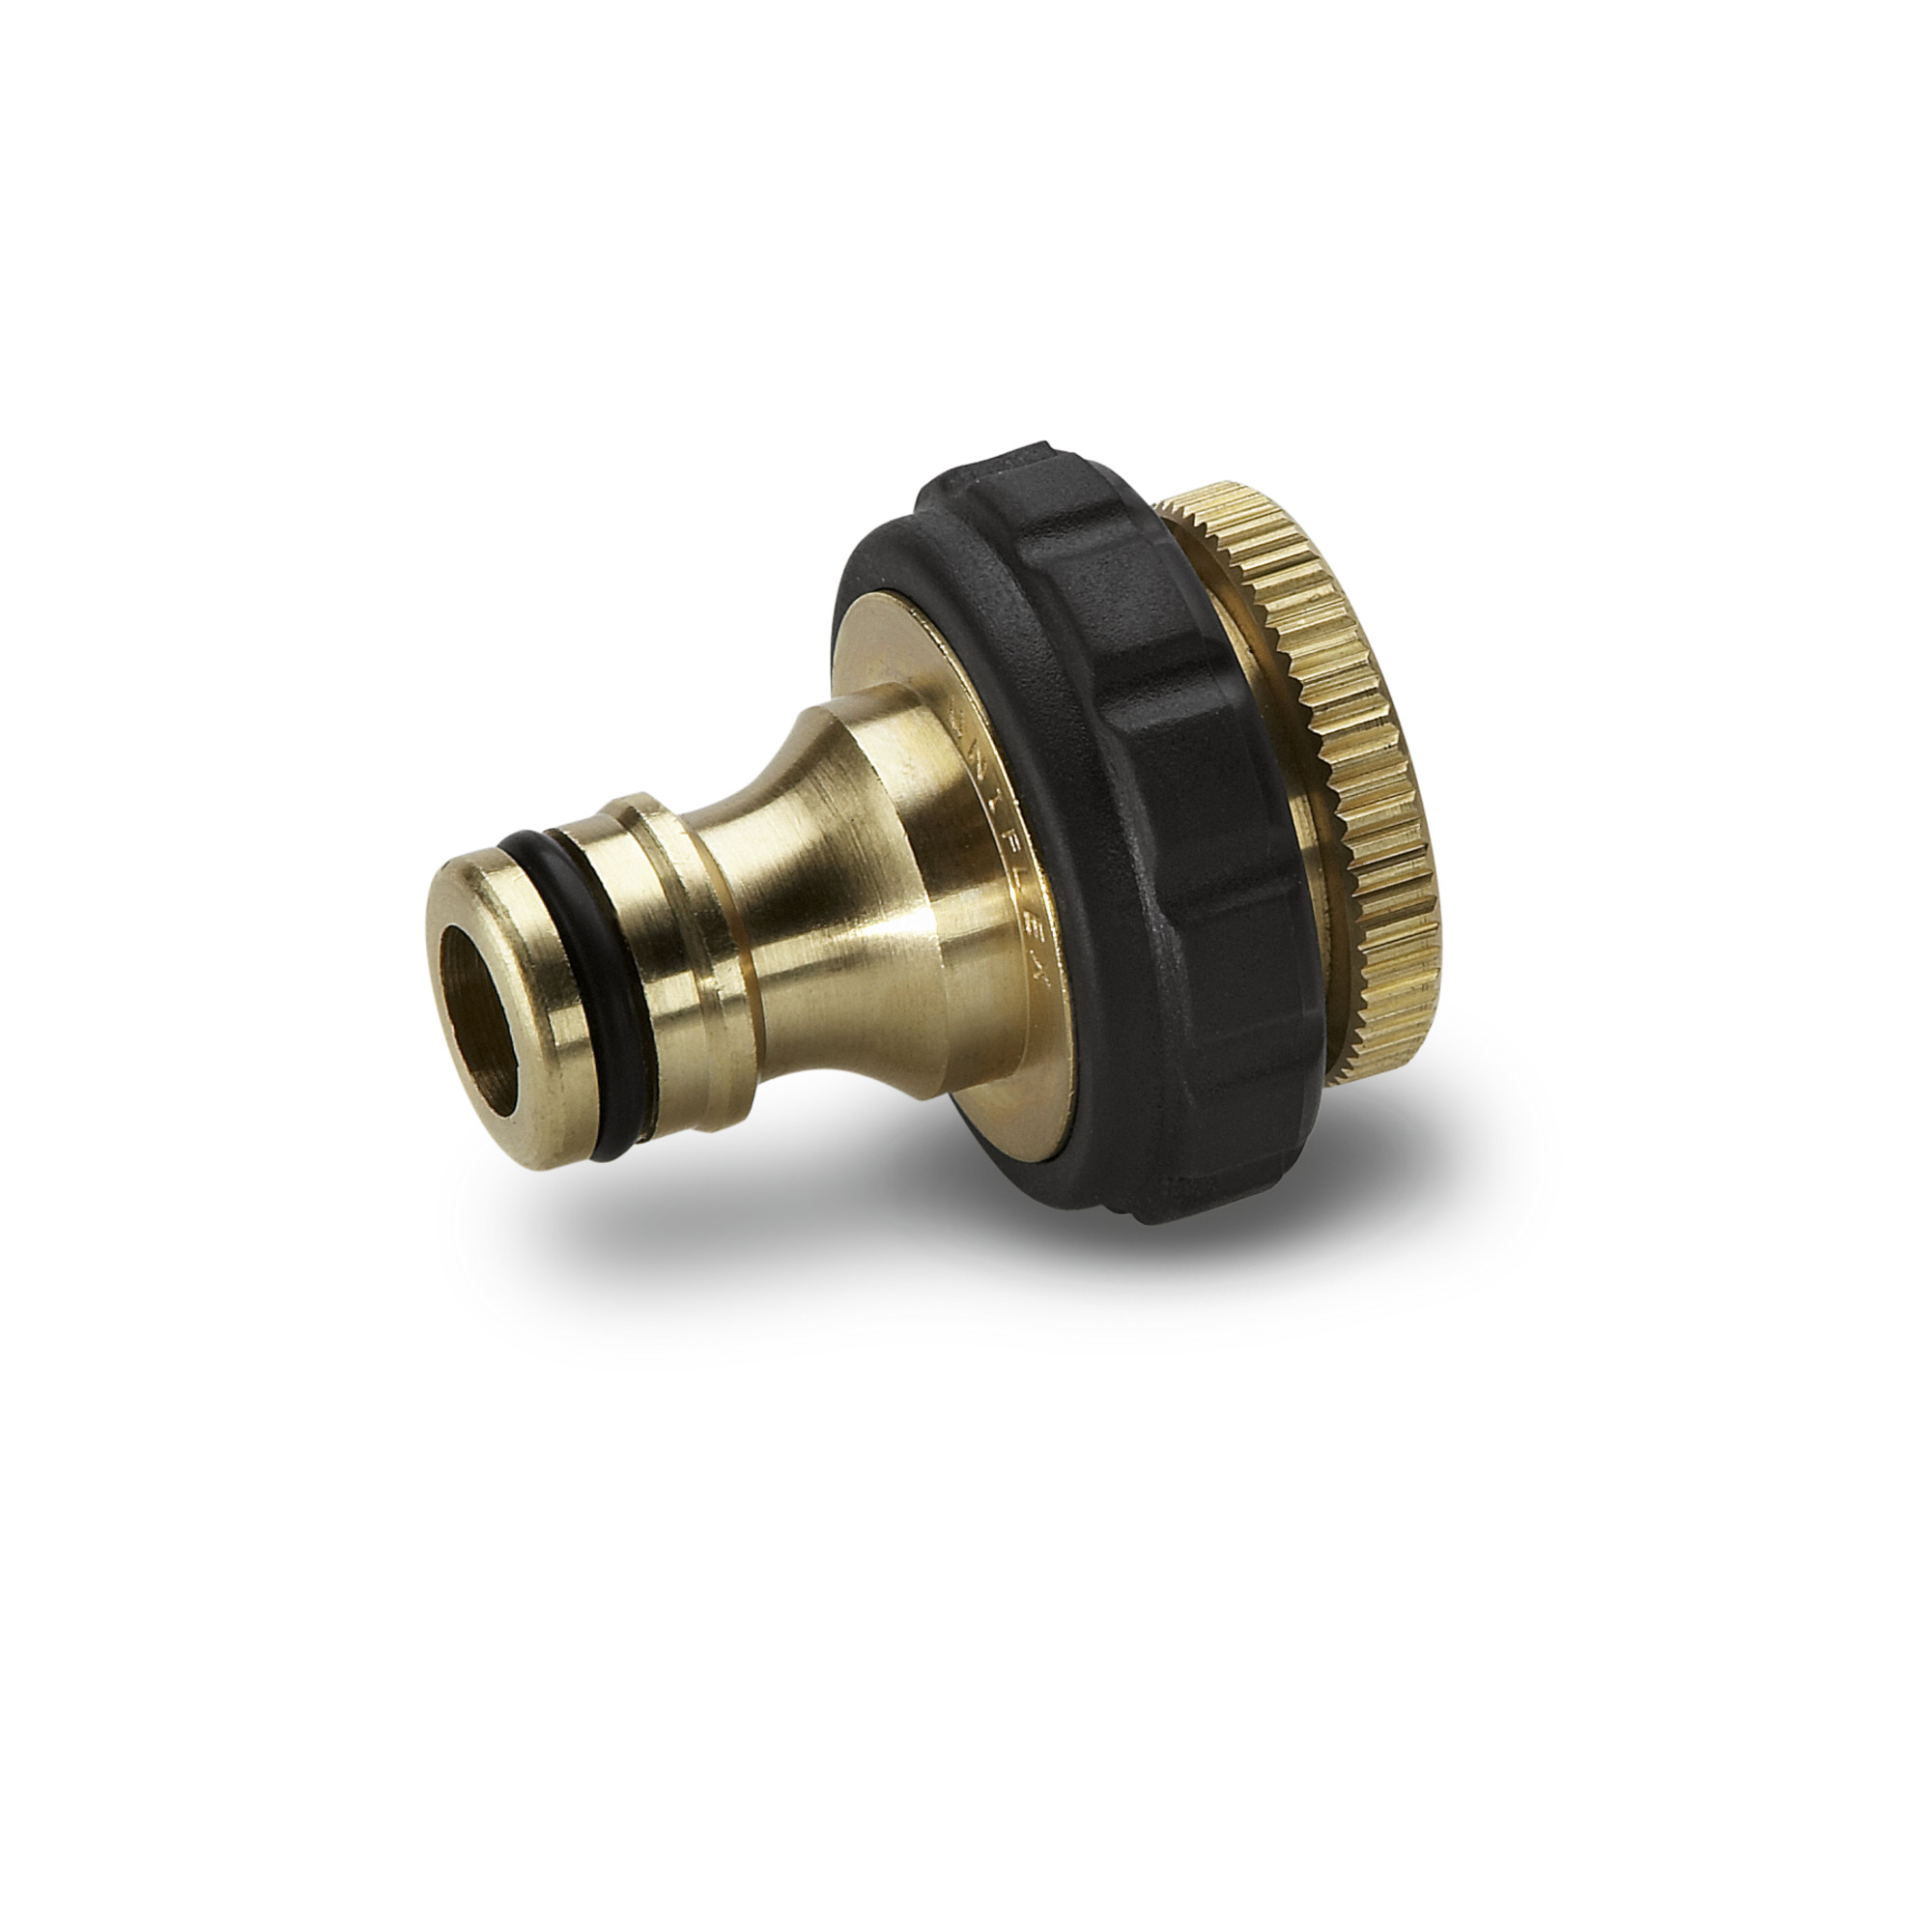 Kaercher Brass tap connector 3/4" thread with 1/2" thread reducer